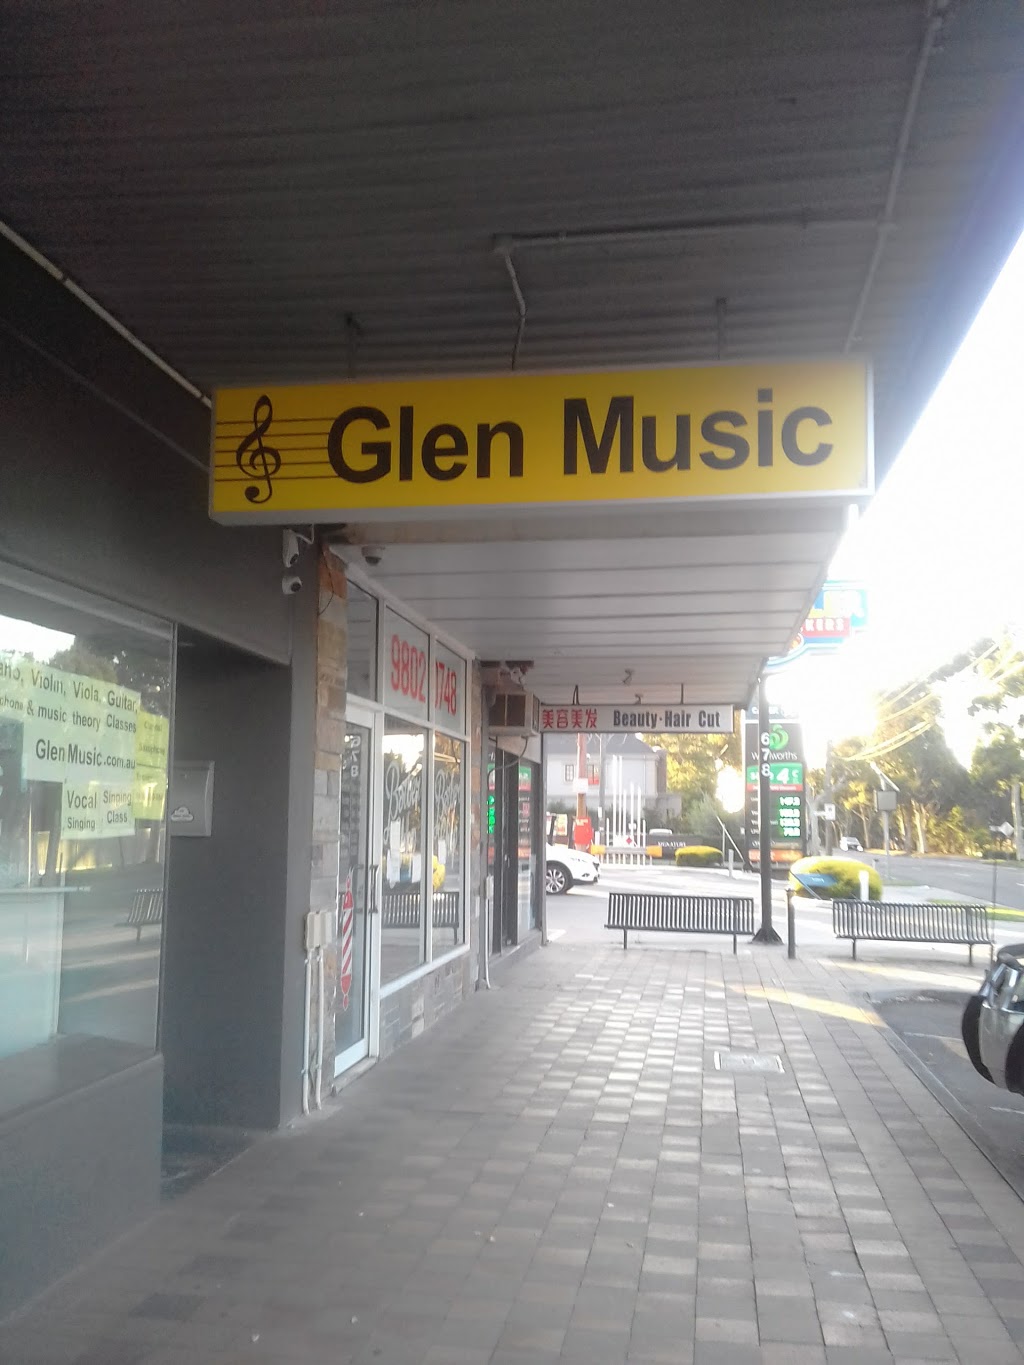 Glen Music - Glen Waverley | 684 High St Rd, Glen Waverley VIC 3150, Australia | Phone: 0450 850 684